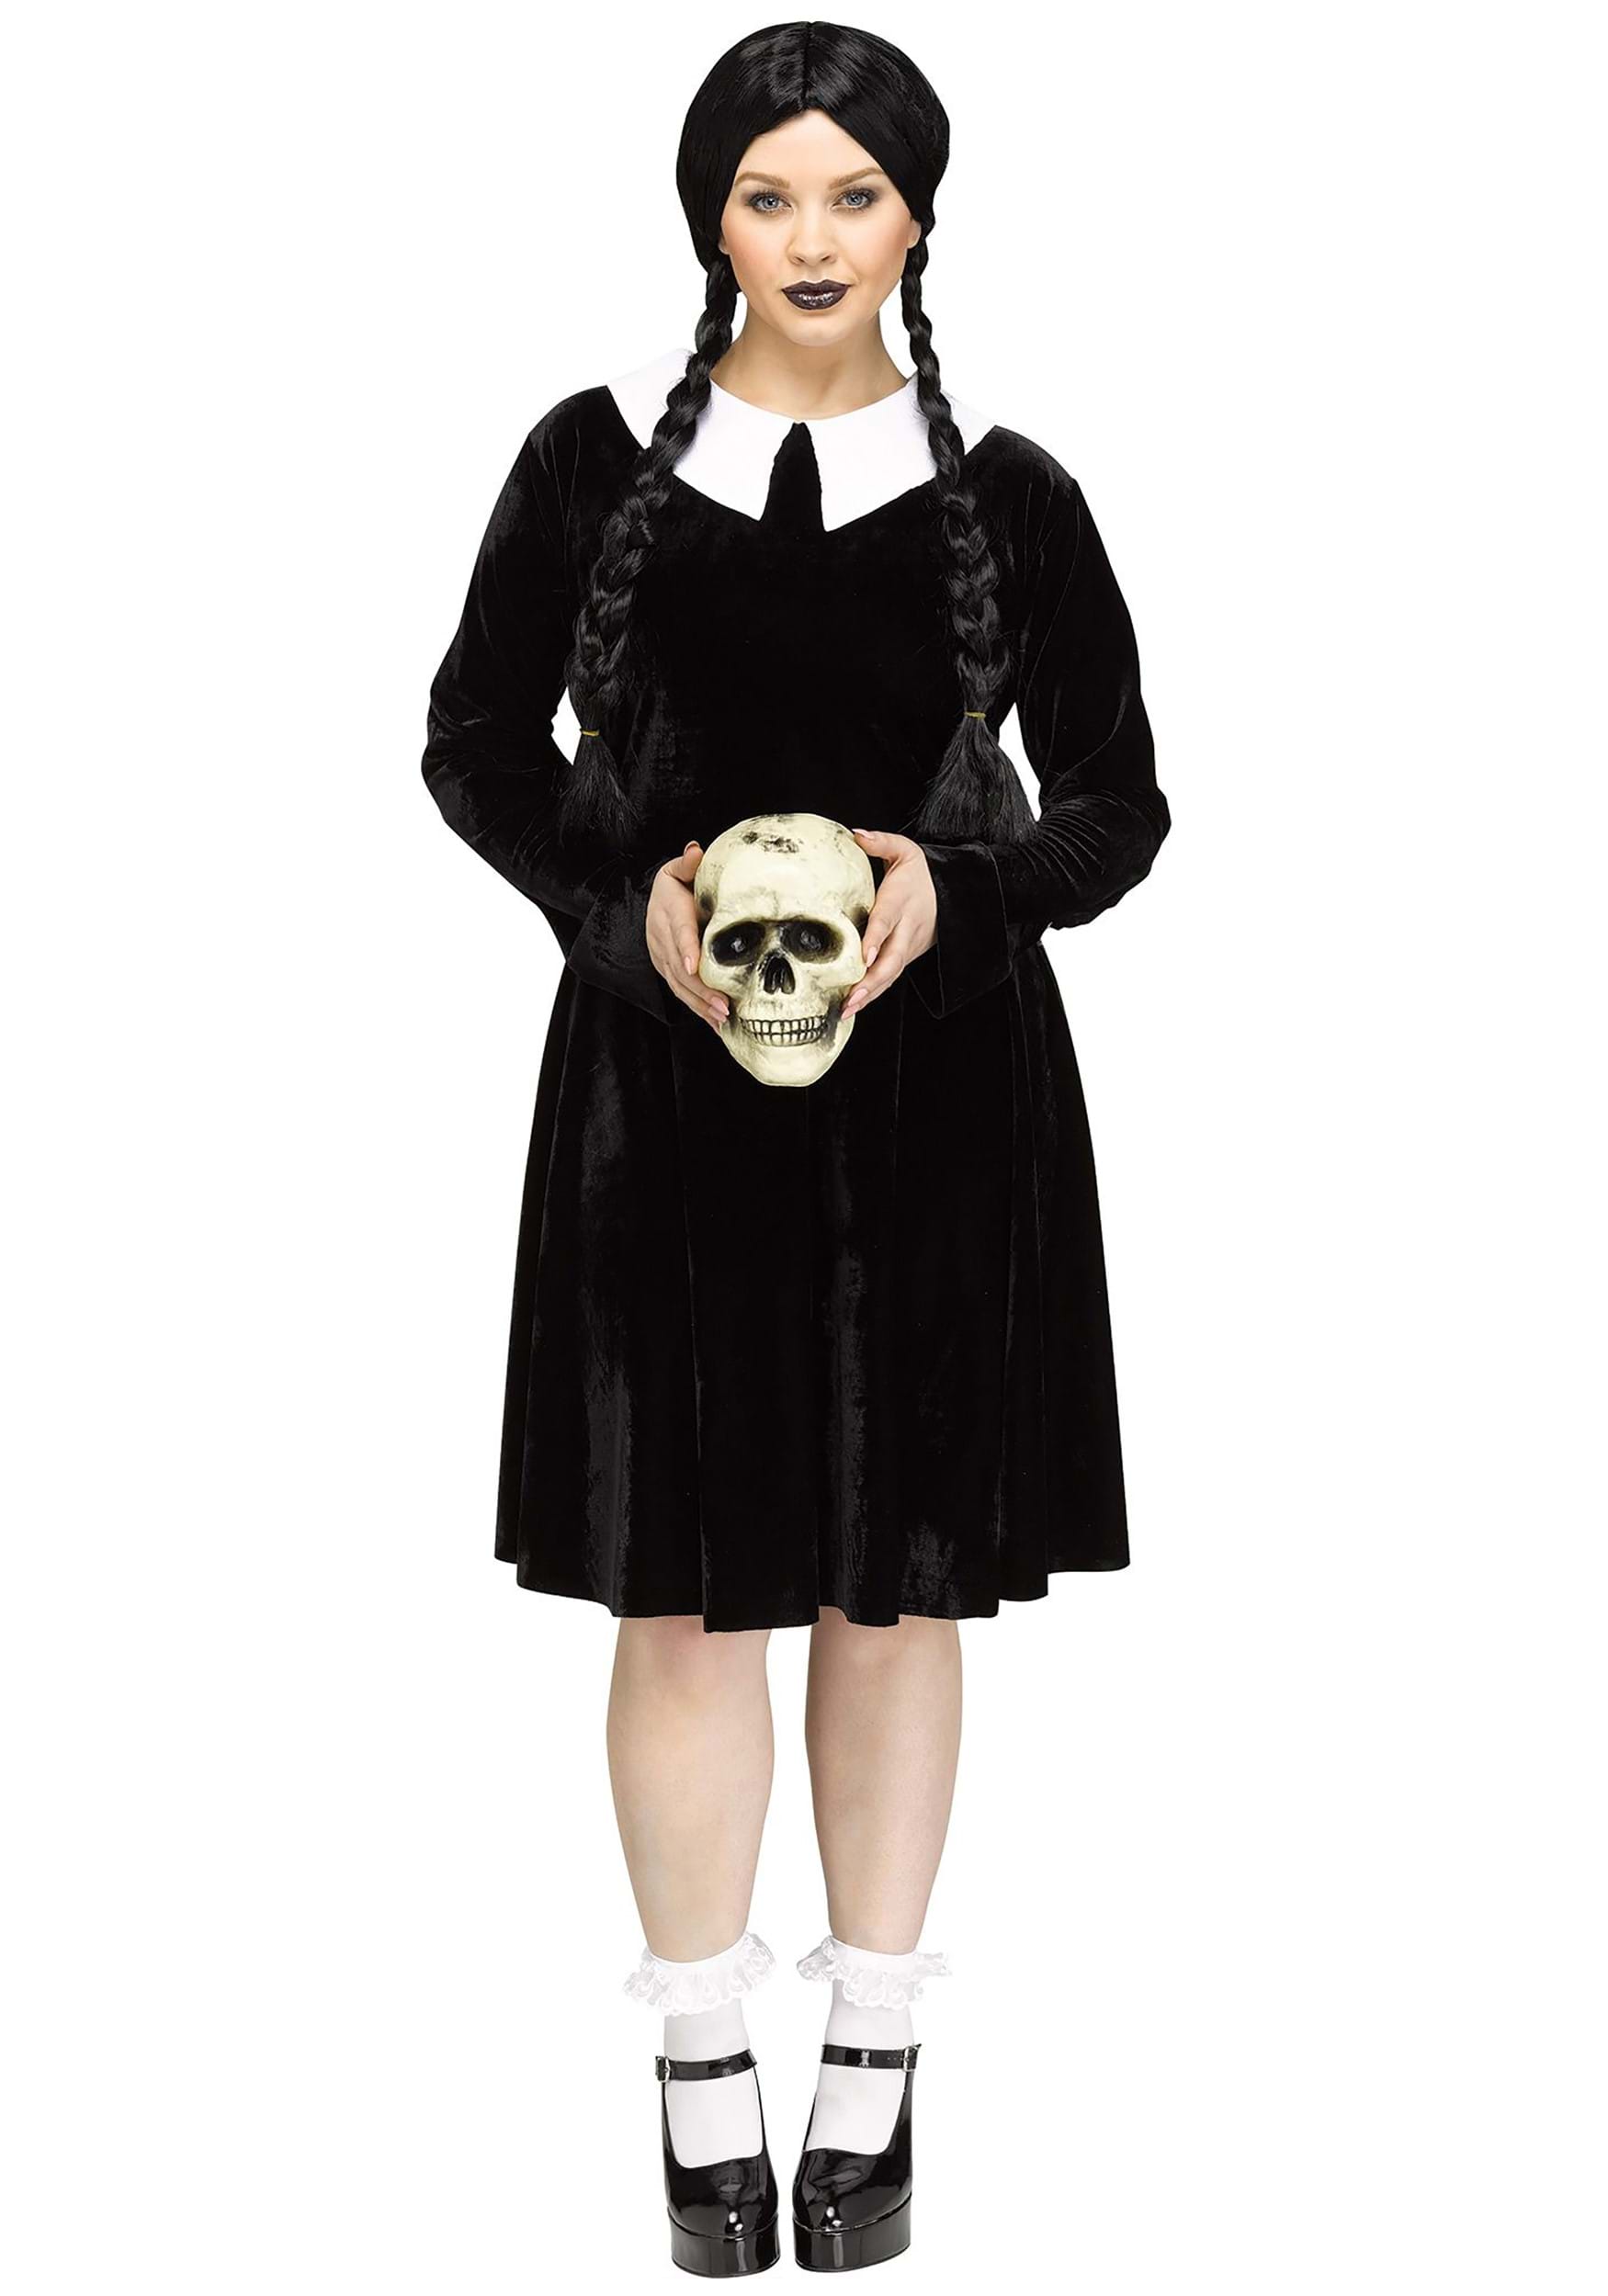 Women’s Plus Size Gothic Girl Costume Dress